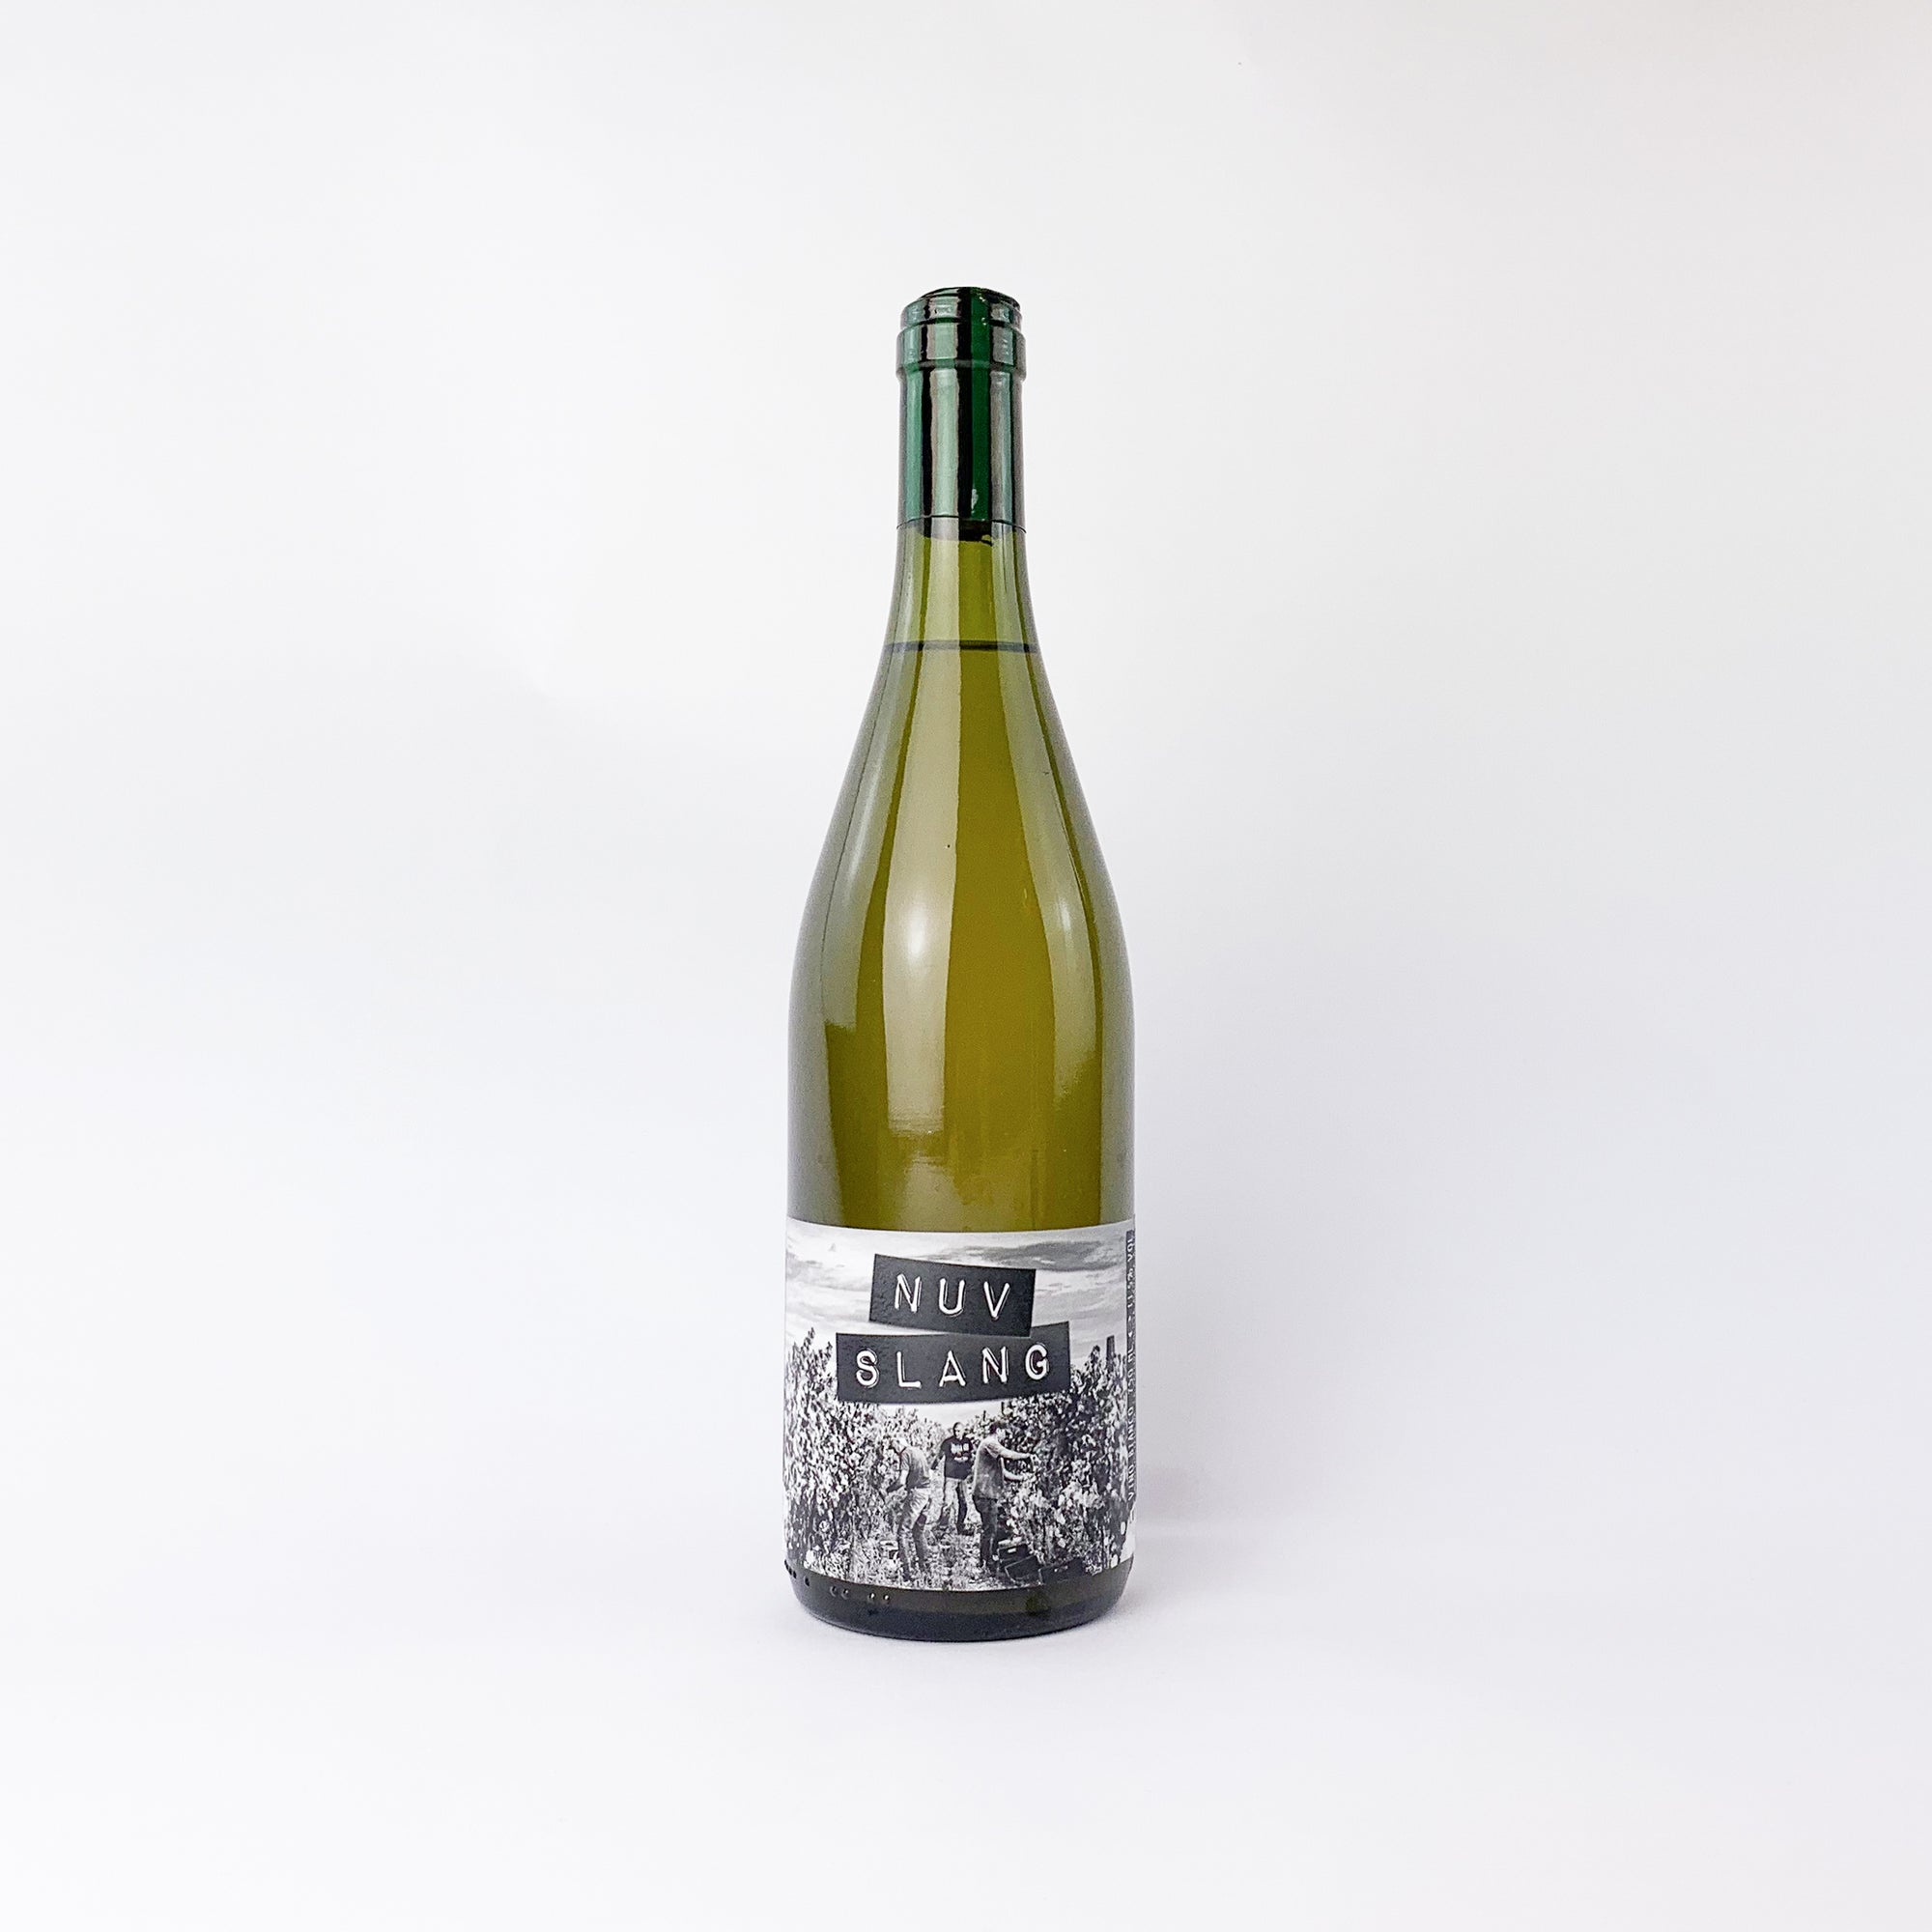 LaCattiva, Nuv Slang, natural white wine bottle, Apulia, Italy